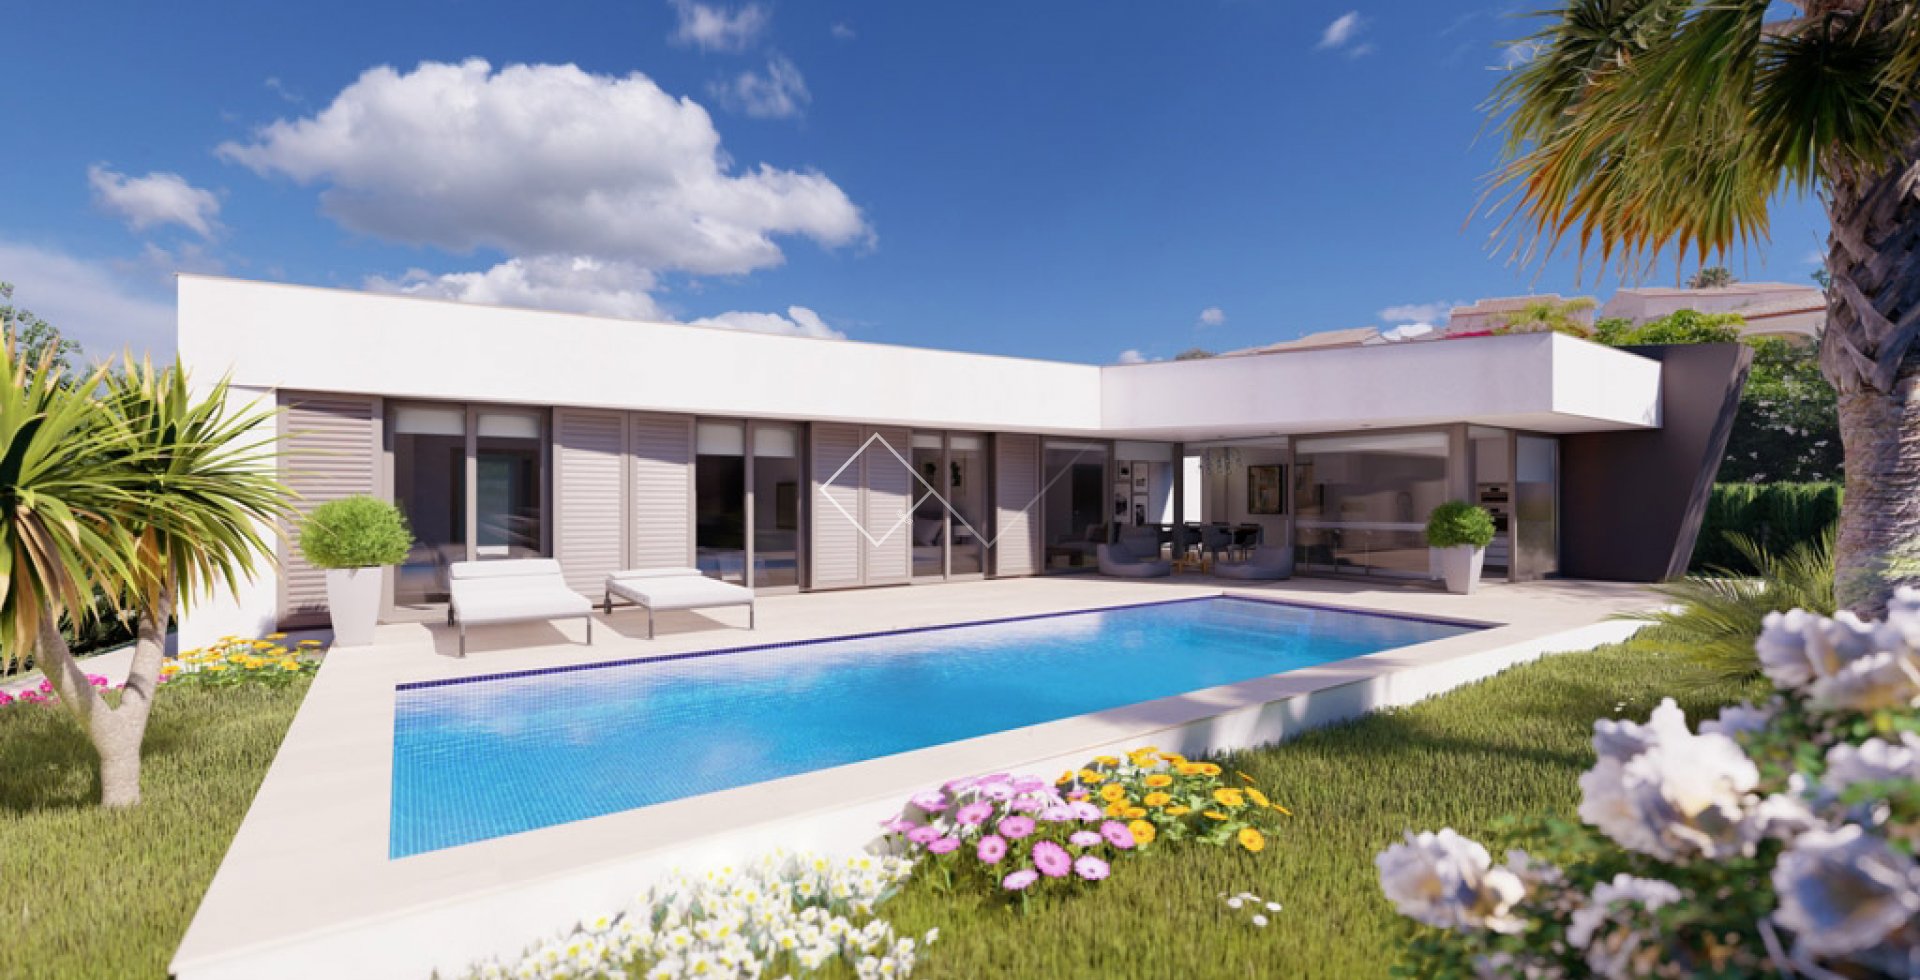 Villa im Ibiza-Stil mit Pool - Modernes Hausprojekt in Gran Sol, Calpe